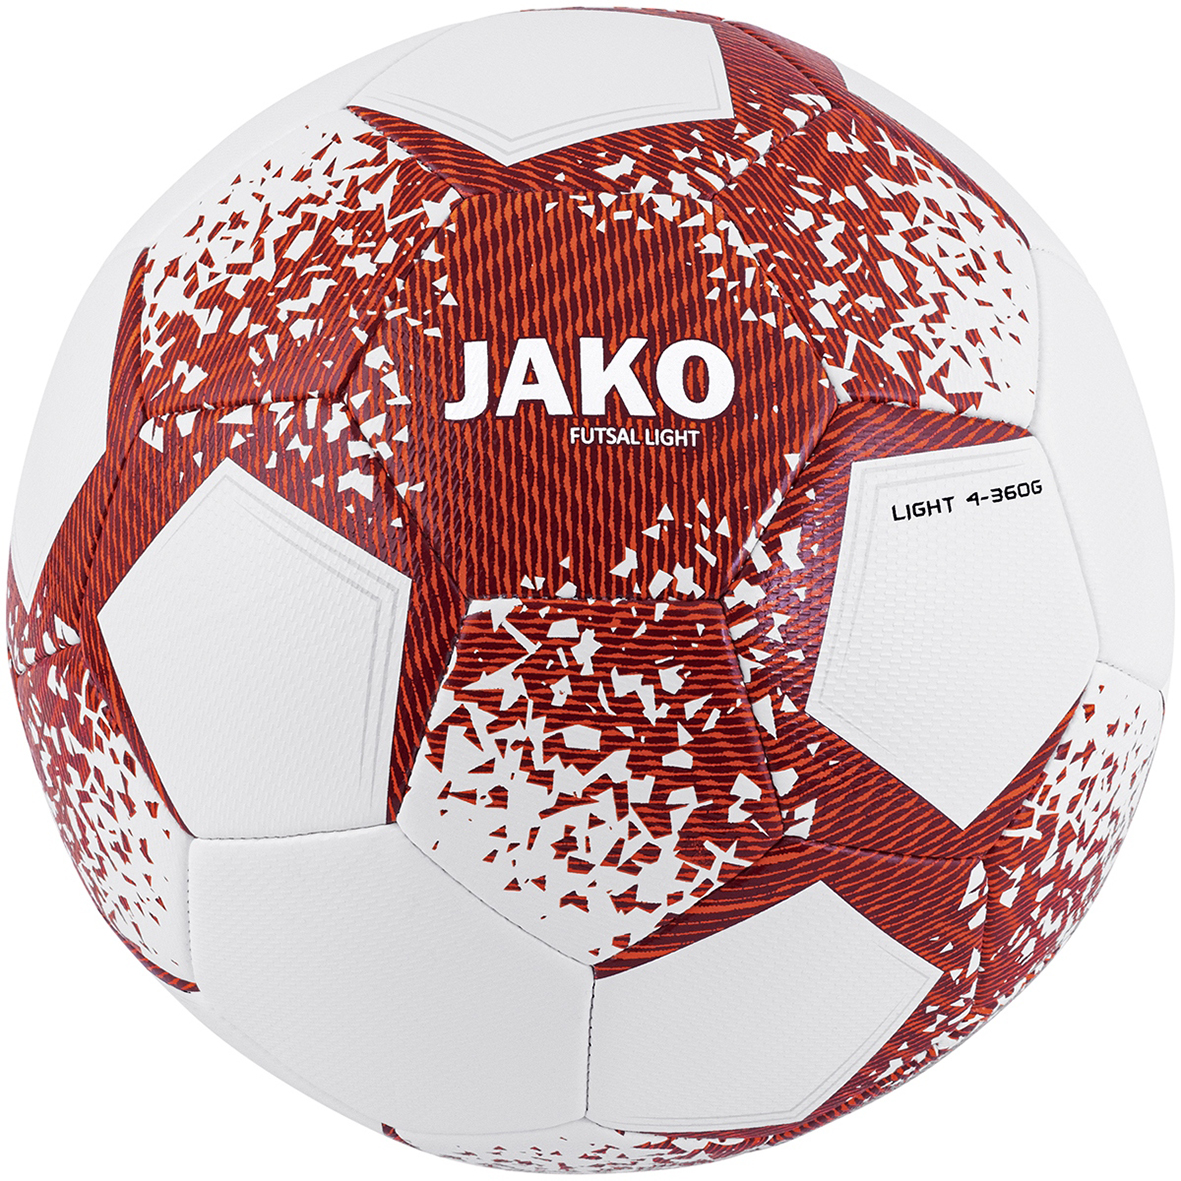 JAKO BALL FUTSAL LIGHT, WHITE-RED-NEON ORANGE.